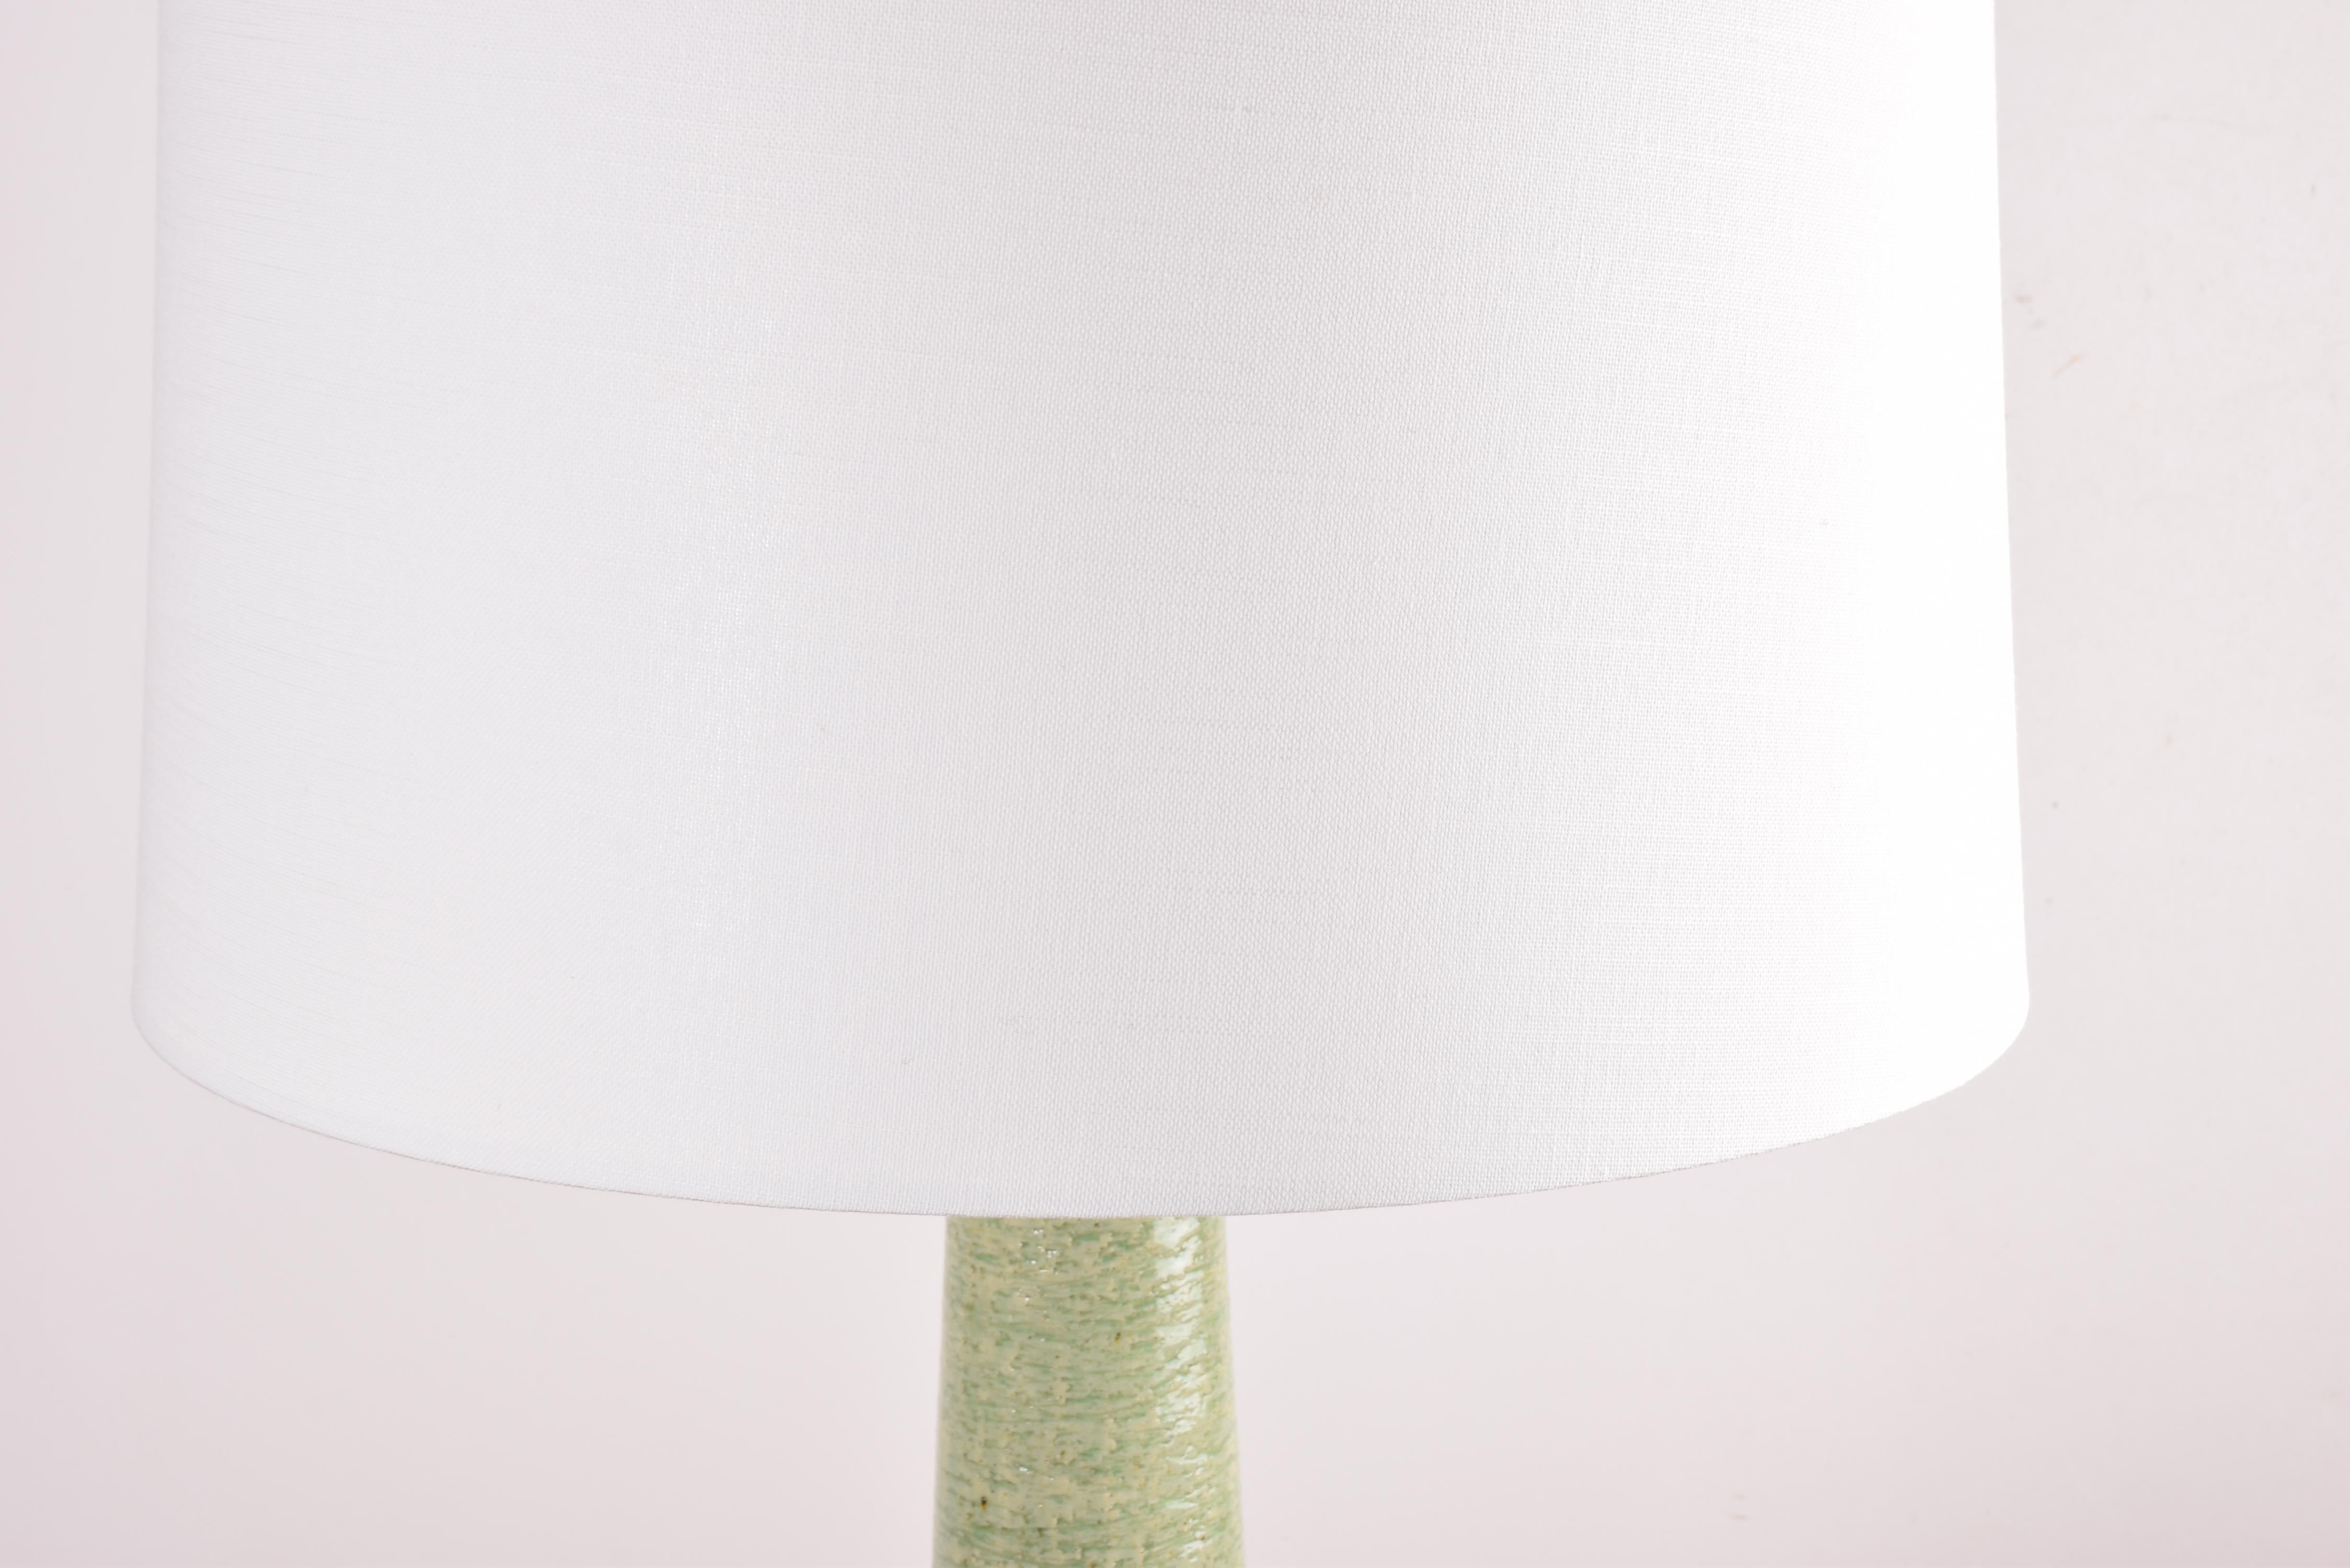 Palshus Very Tall Ceramic Table Lamp Green Glaze, Danish Midcentury Modern 1960s For Sale 2